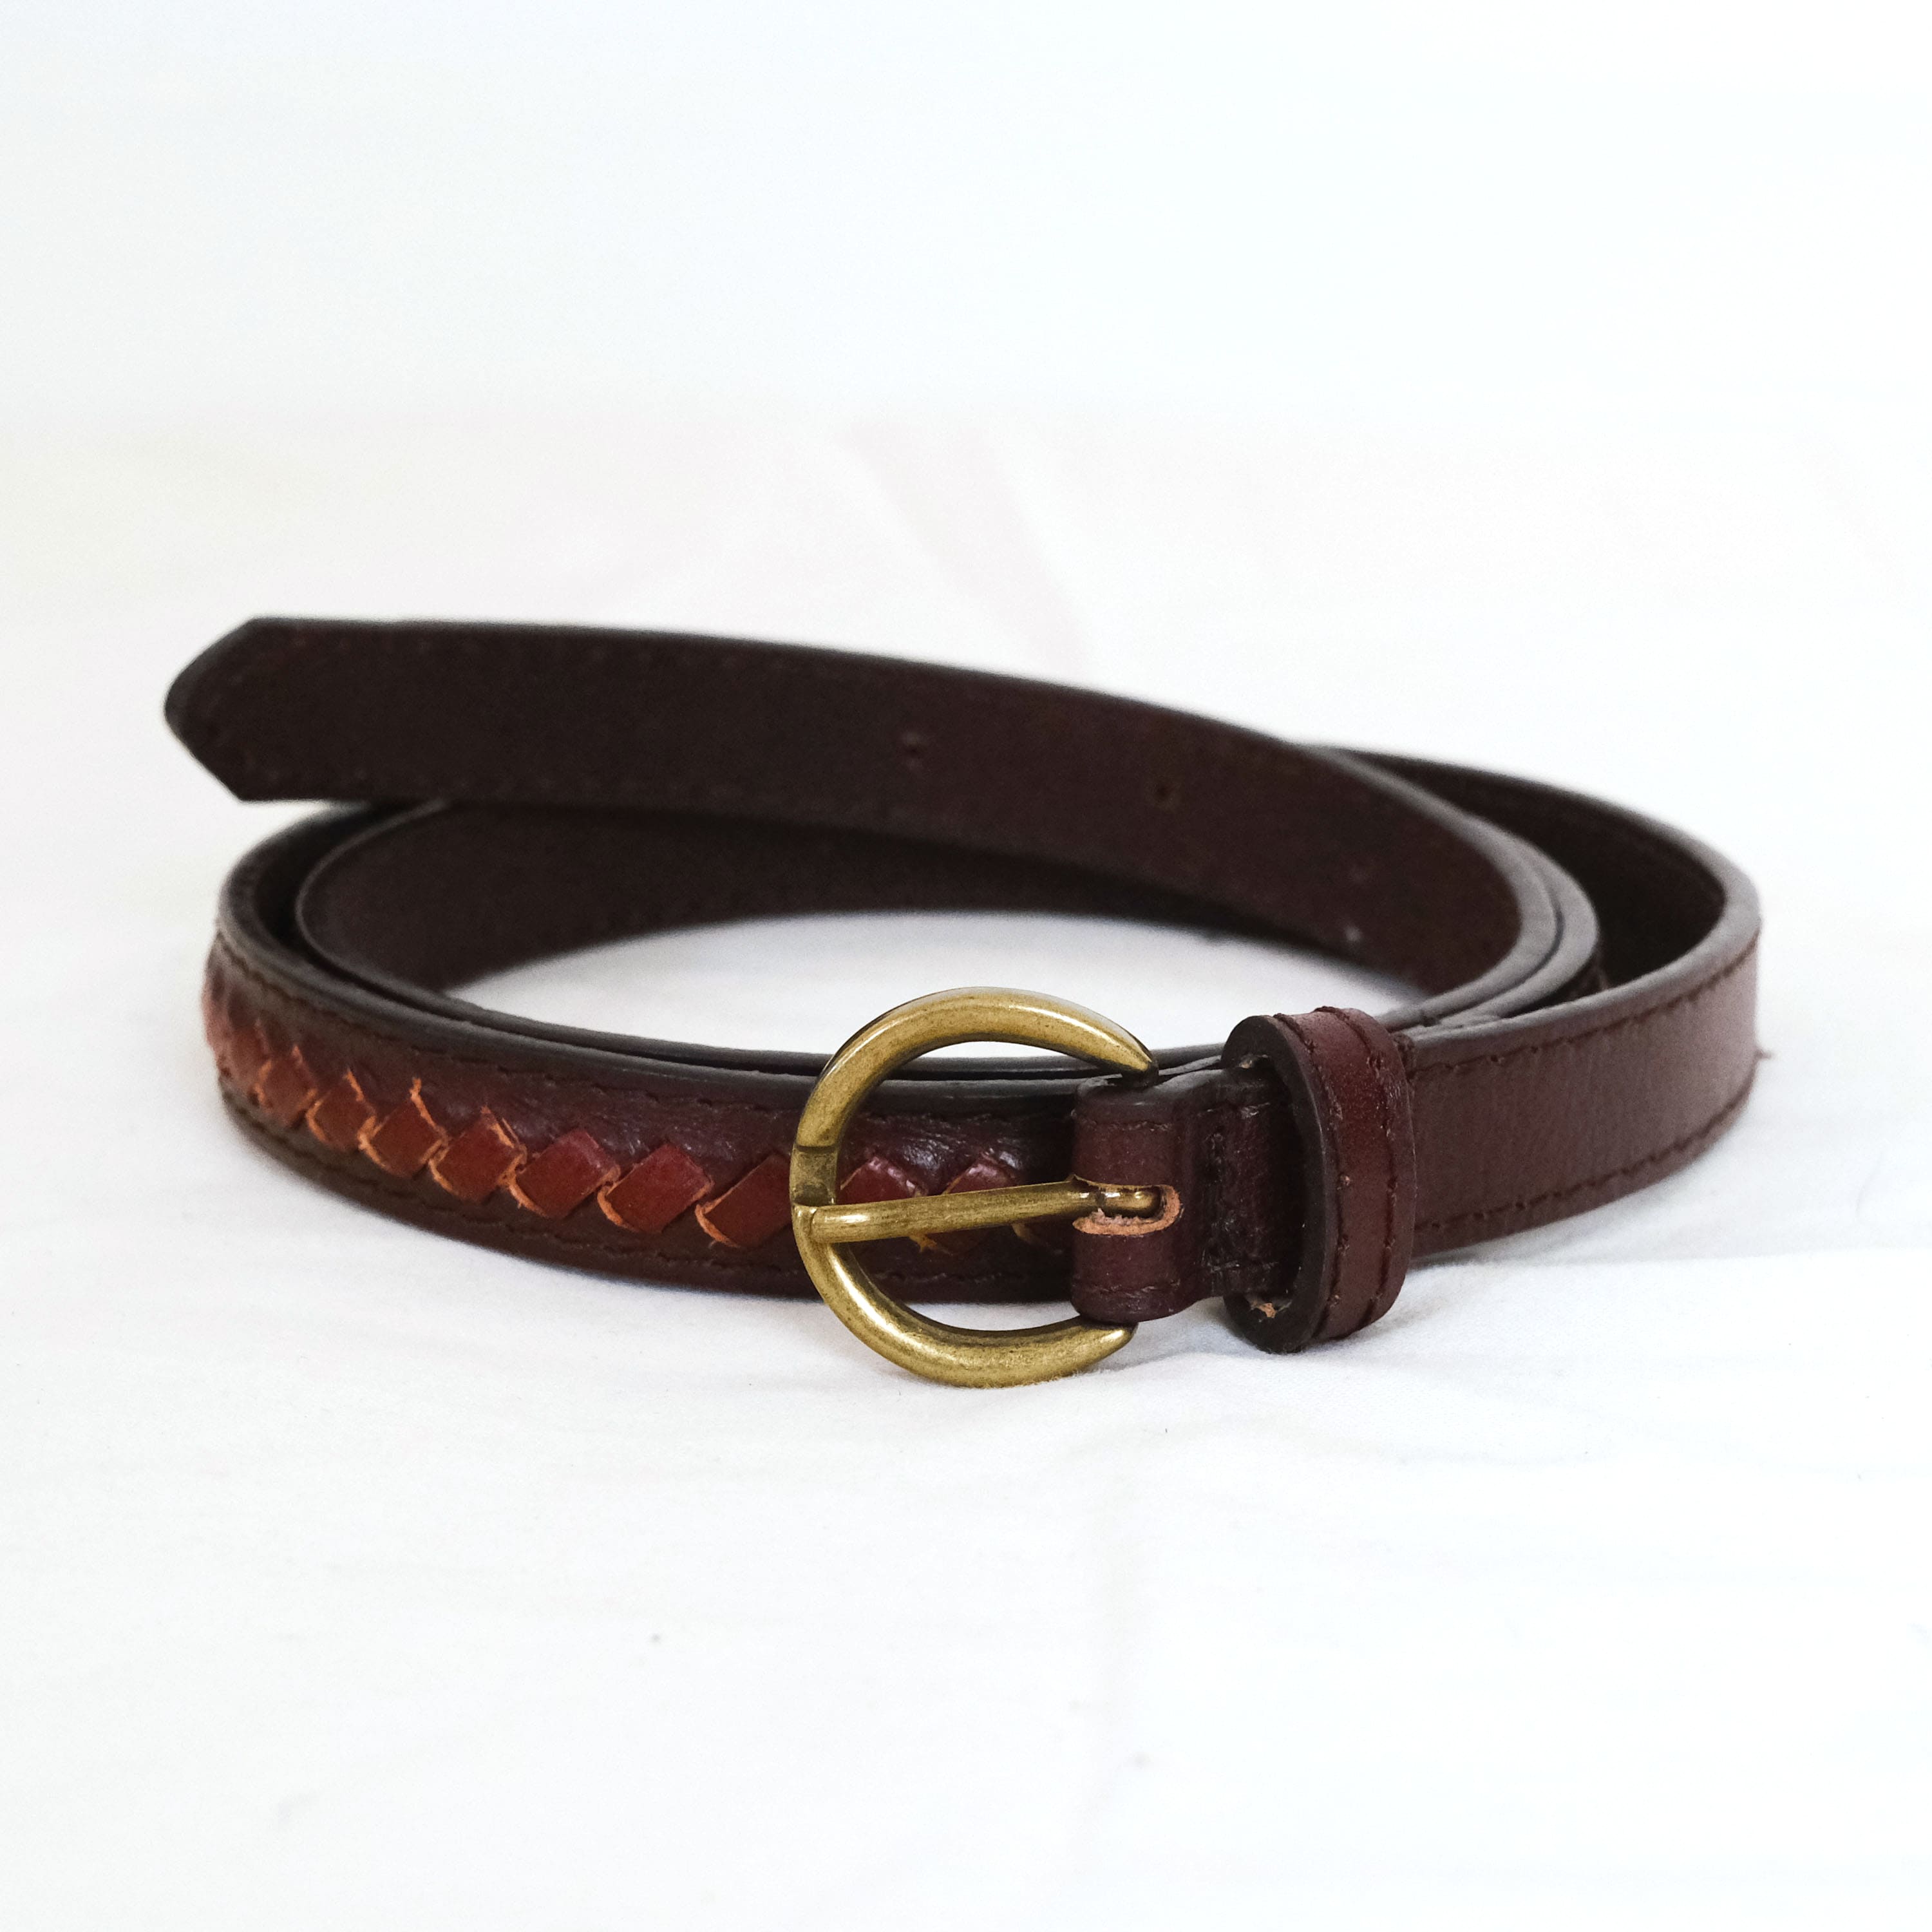 Tory Leather Braided Belt